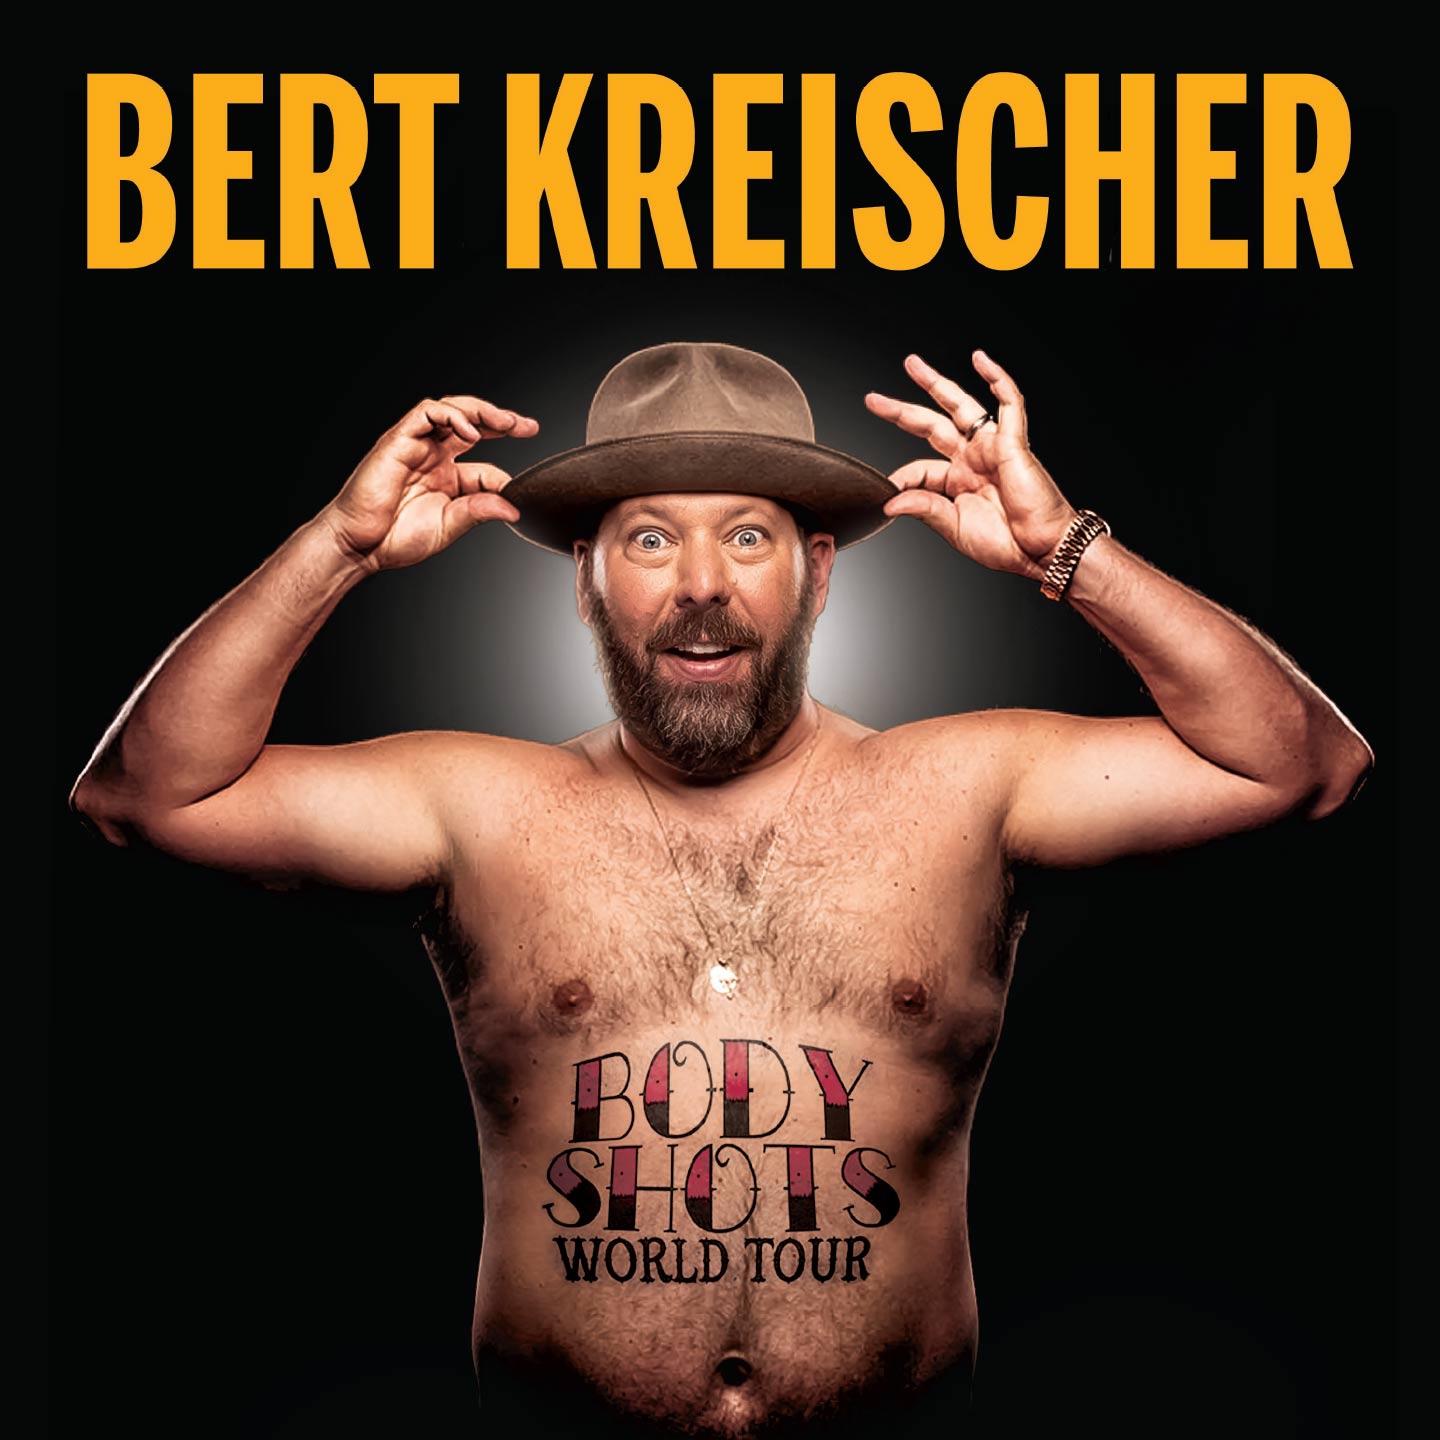 comedians on tour with bert kreischer